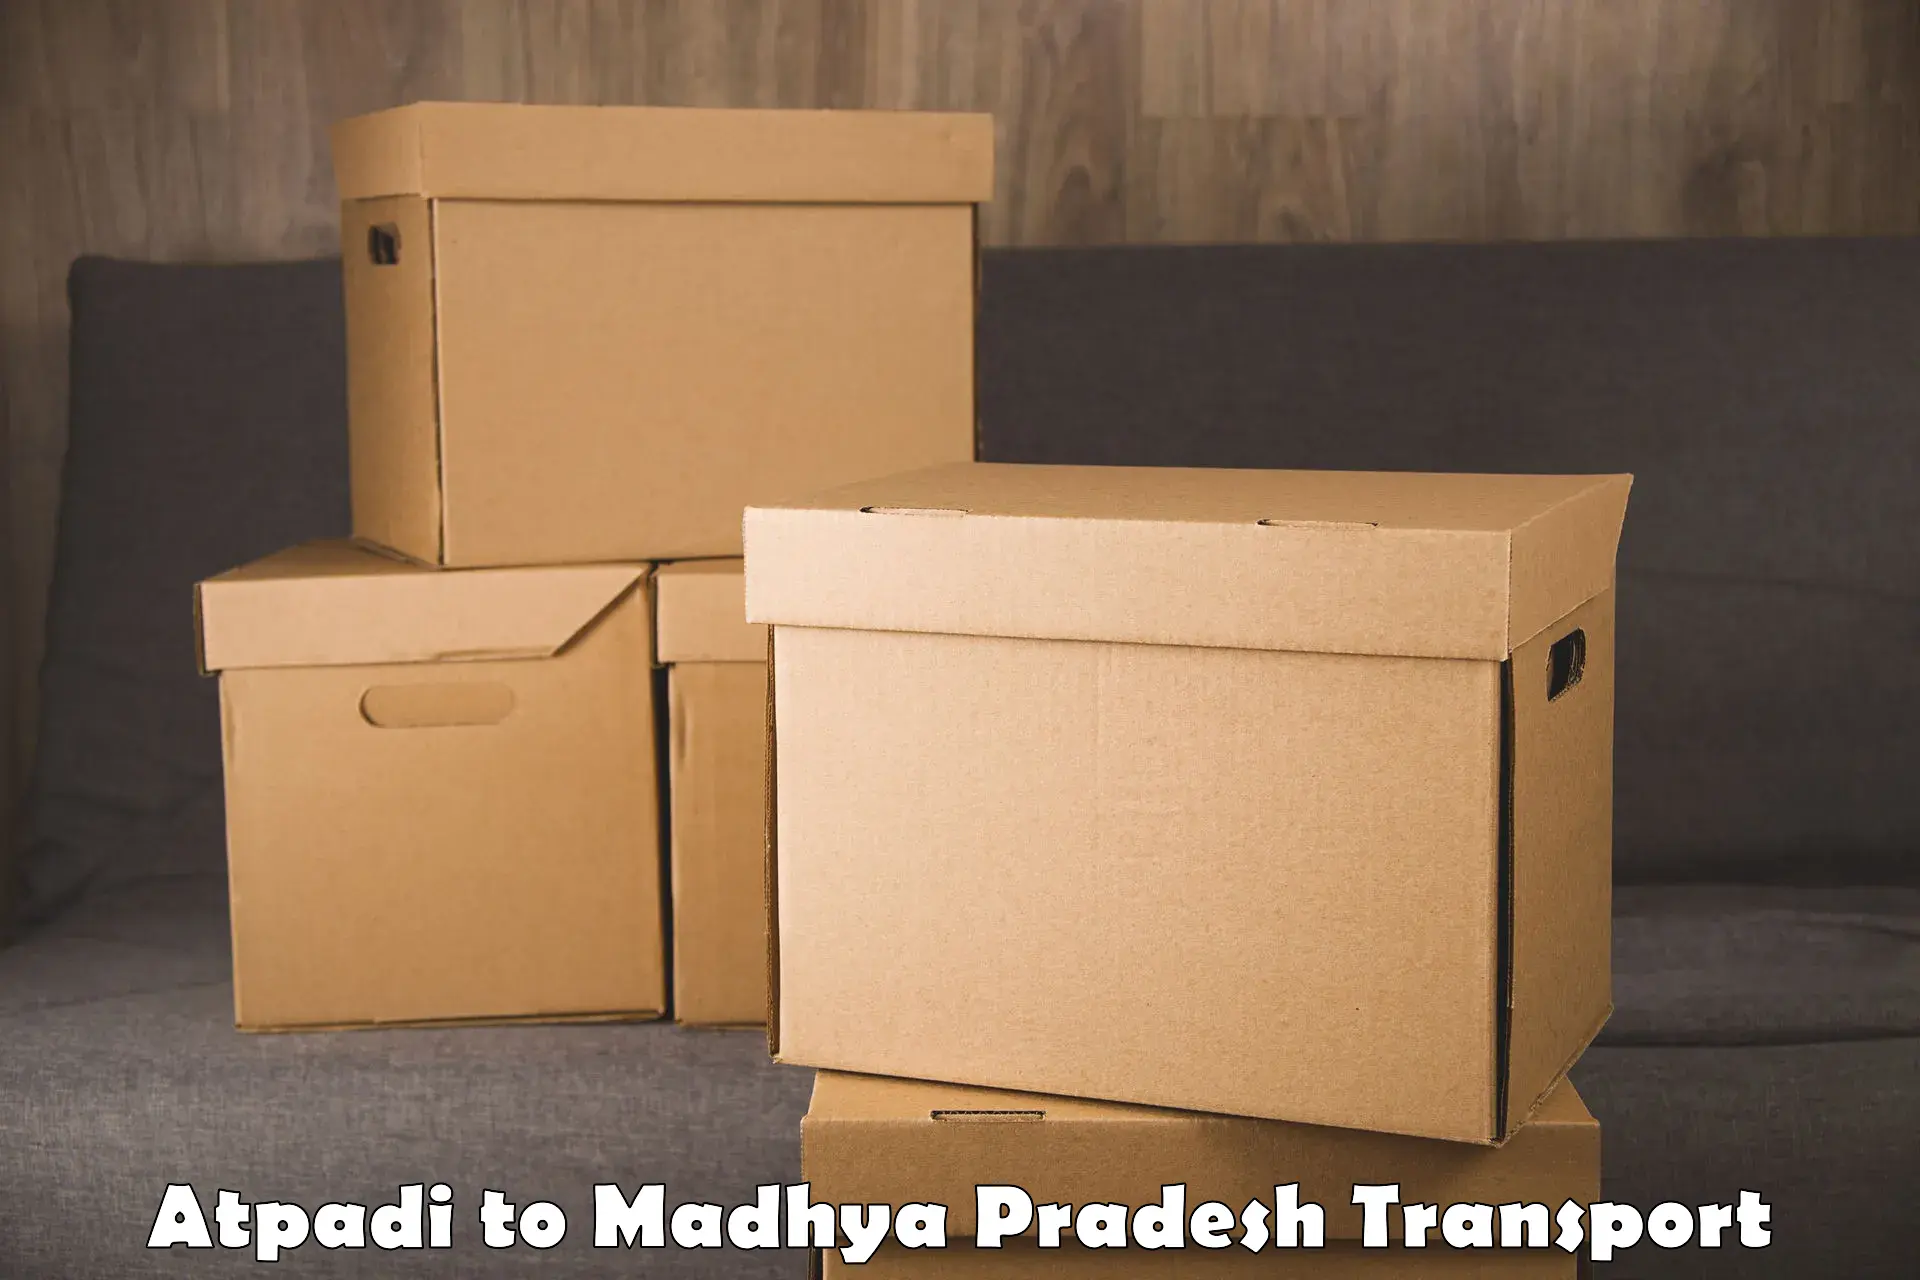 Truck transport companies in India Atpadi to Sohagi